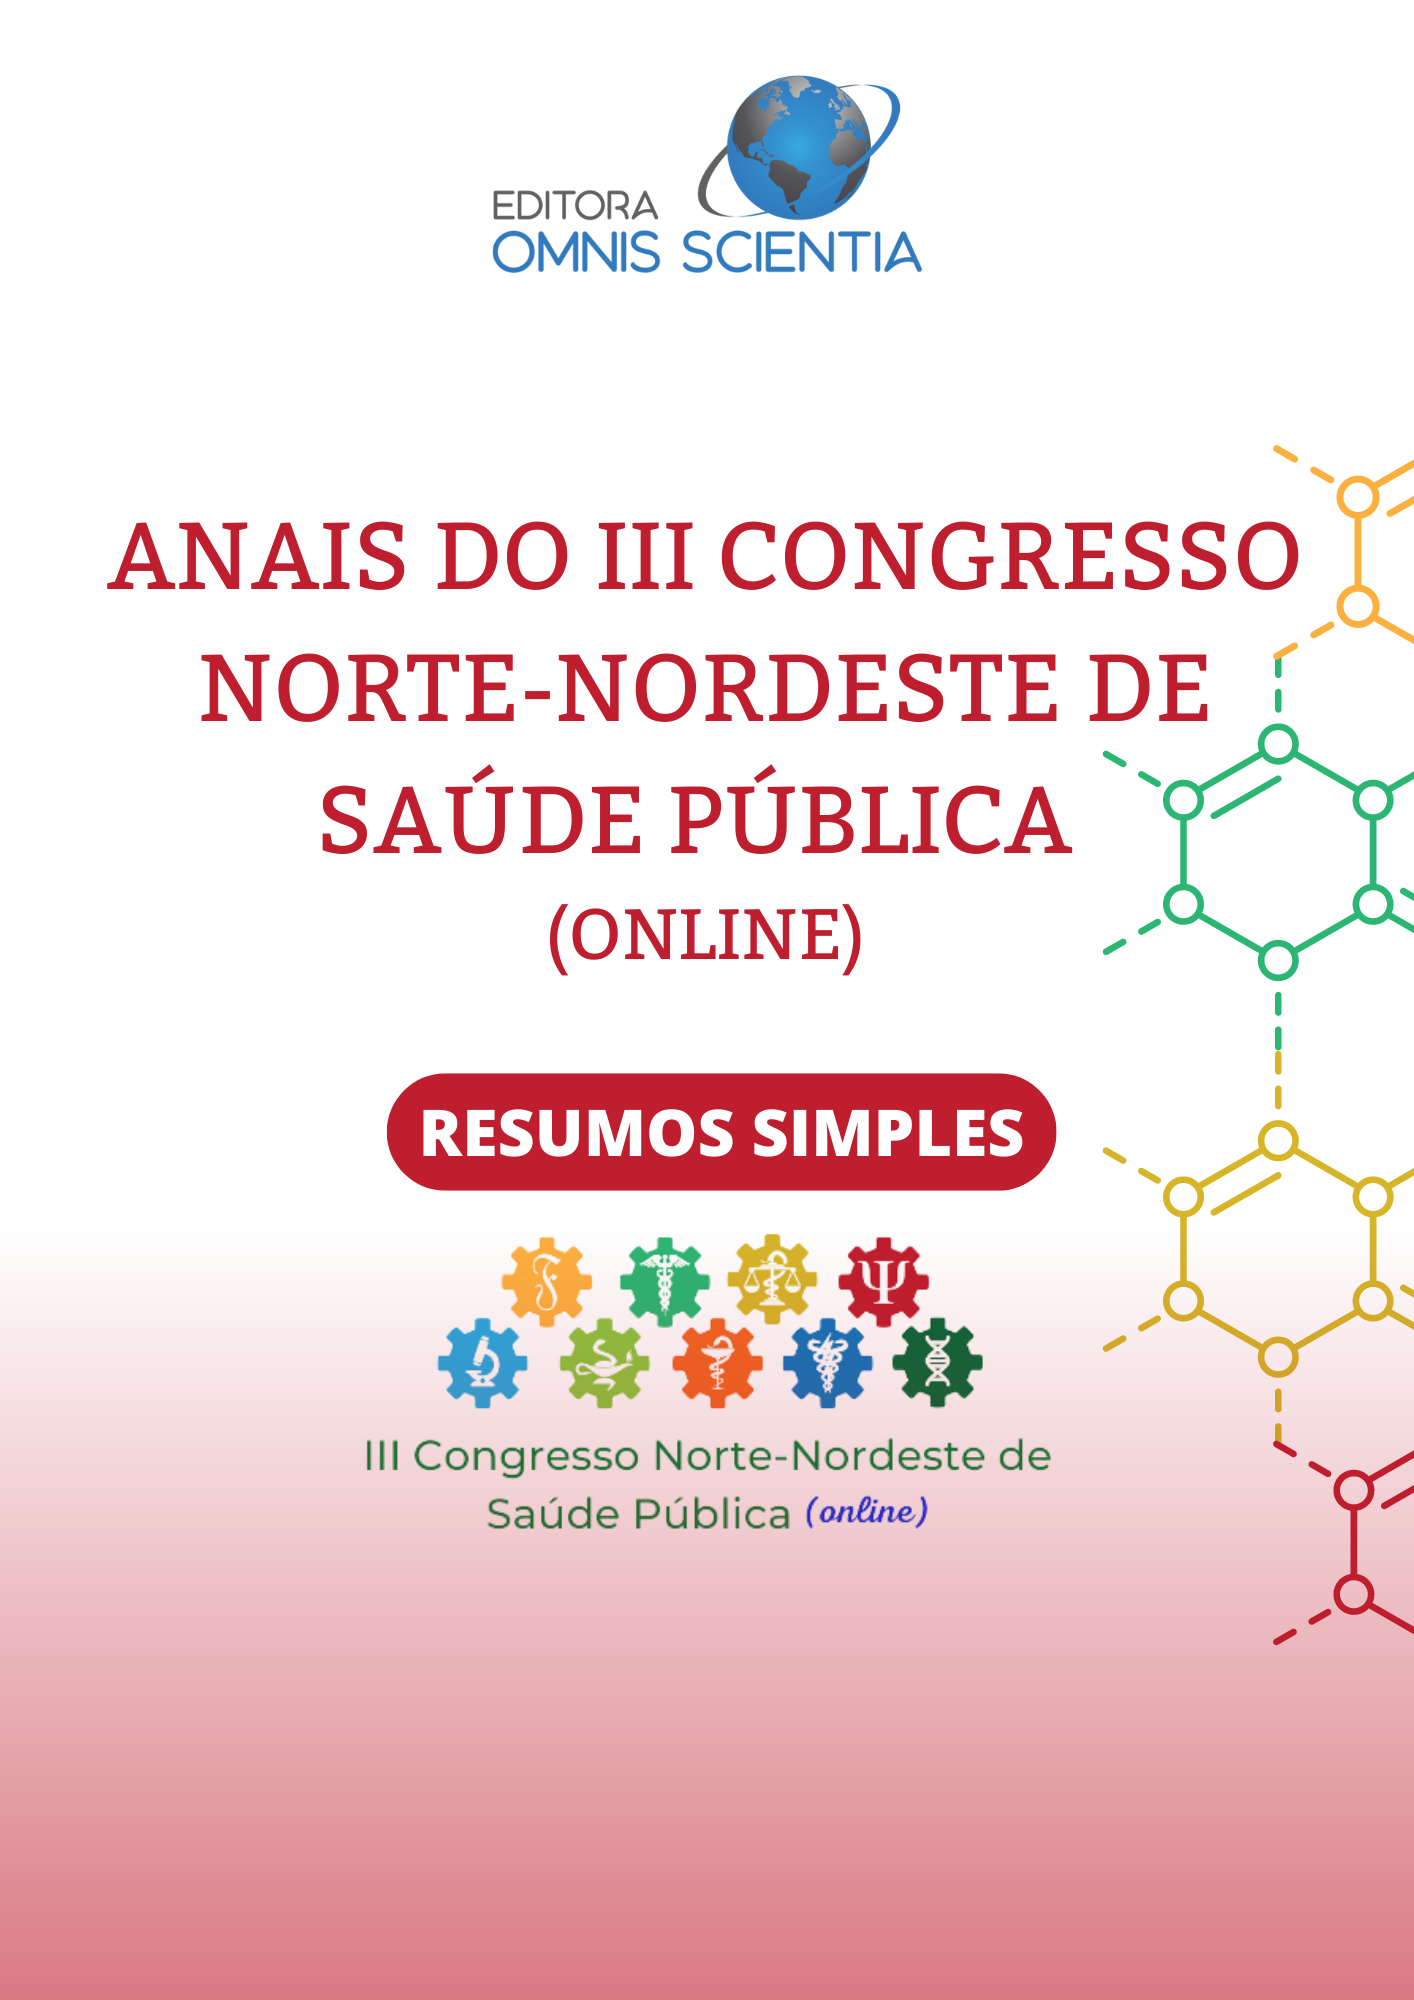 ANAIS DO III CONGRESSO NORTE-NORDESTE DE SAÚDE PÚBLICA (ONLINE)  RESUMOS SIMPLES